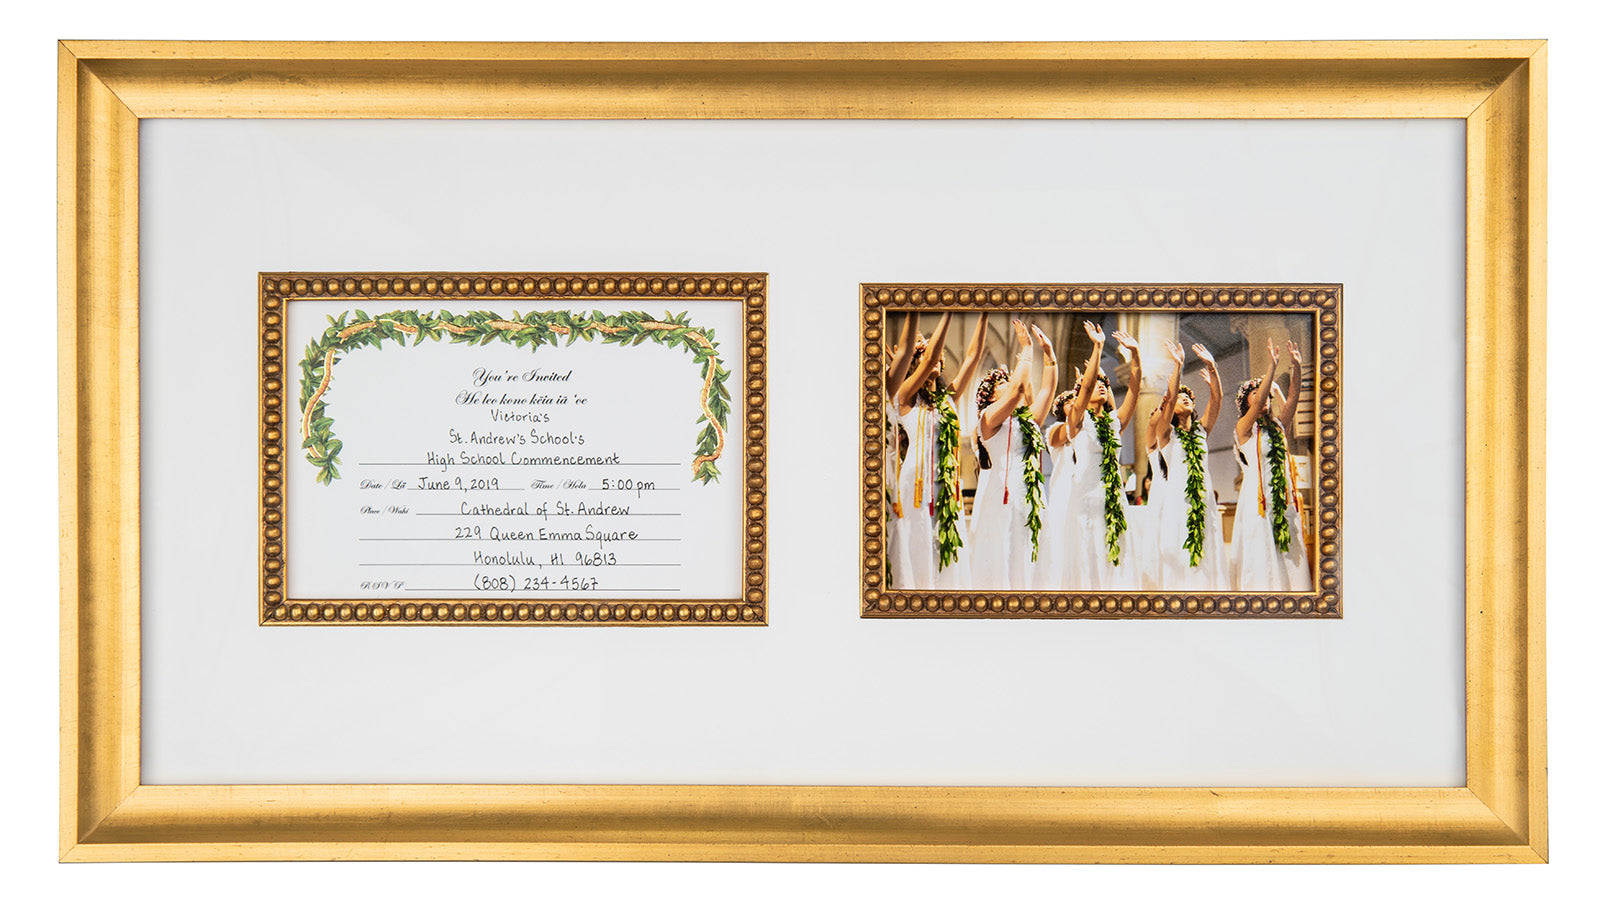 Framed graduation photo and invitation on Hawaii Fine Stationers stationery